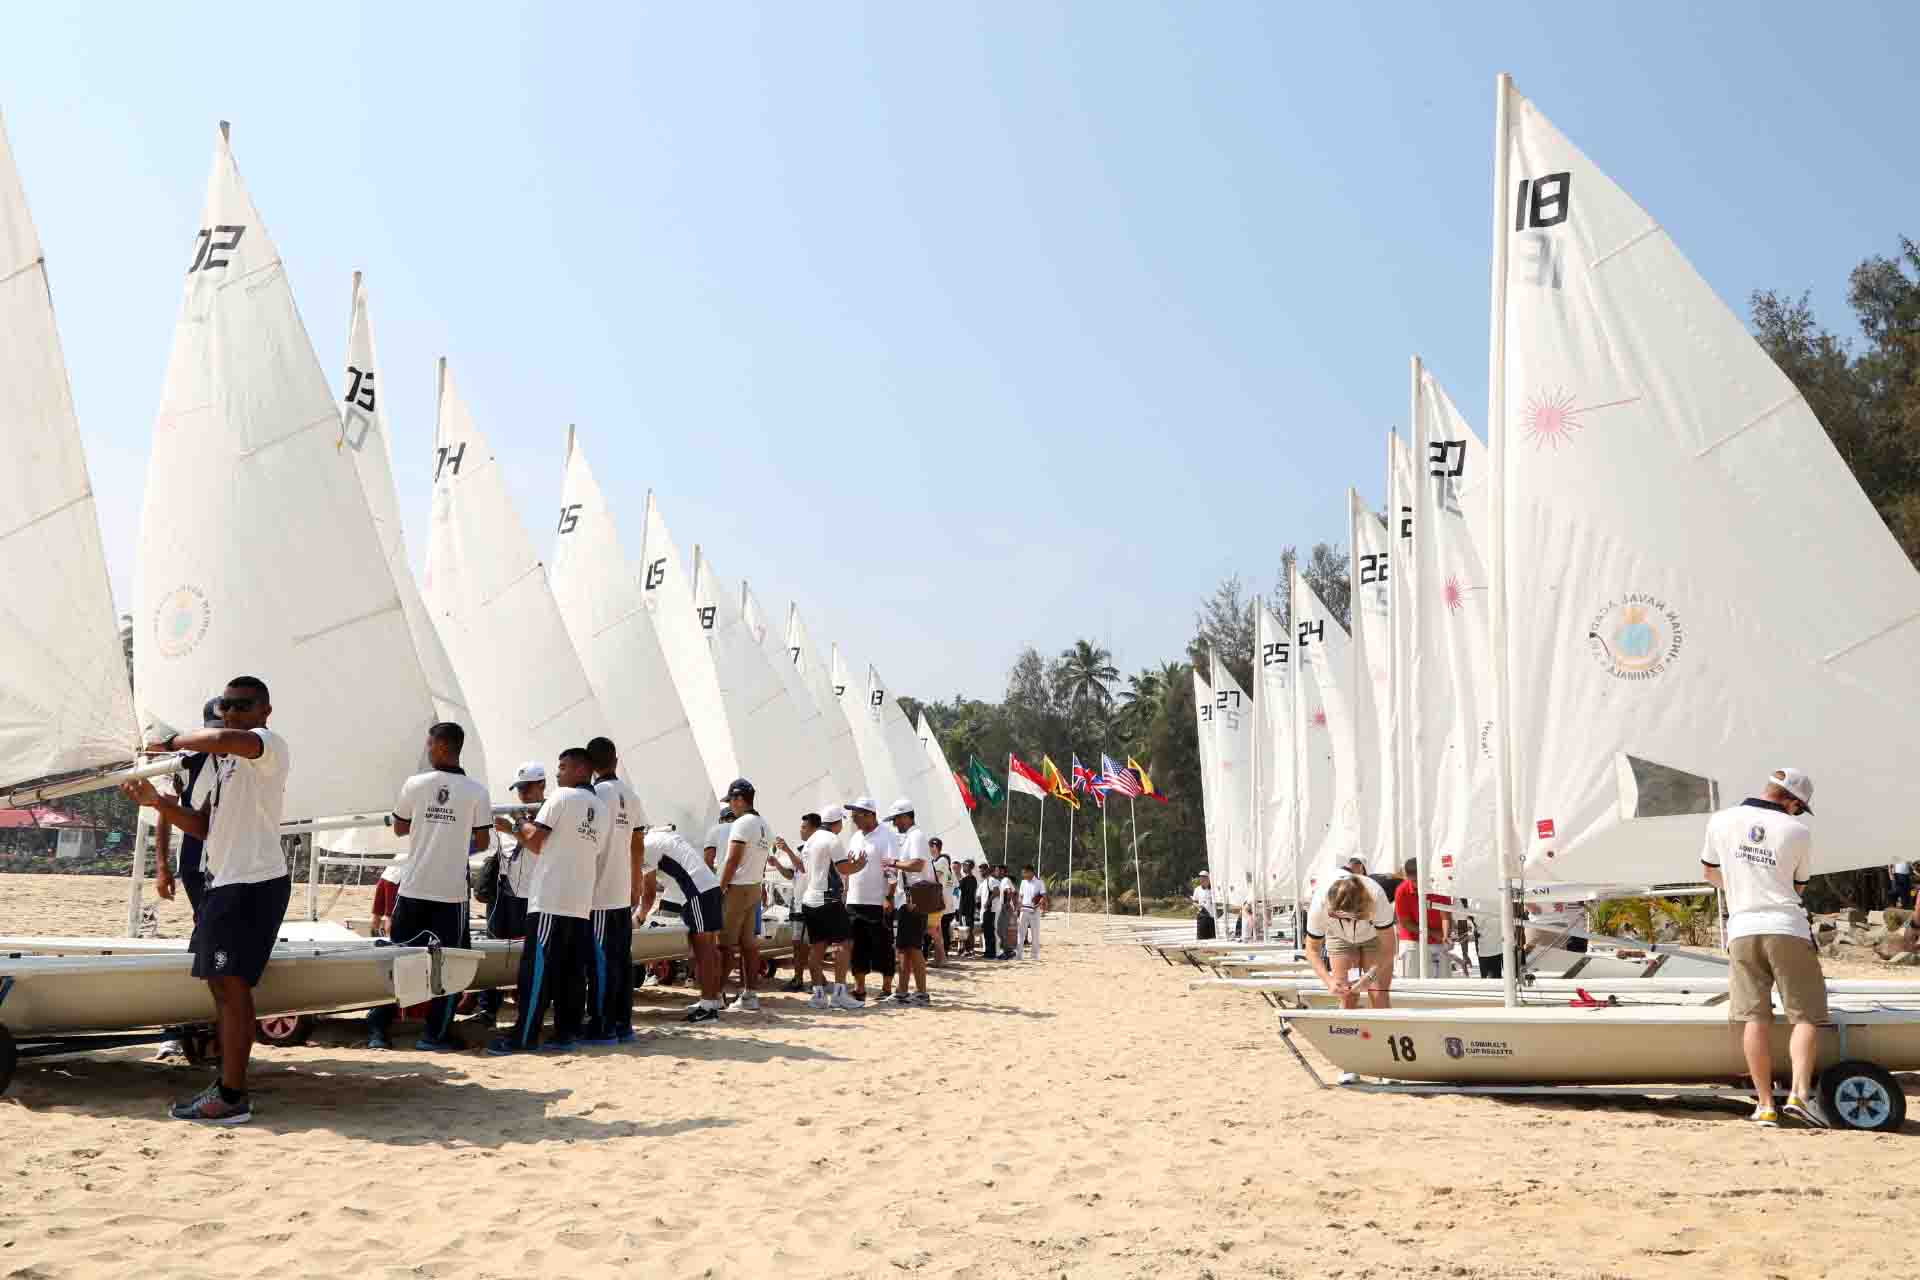 Sailors from across seas ride the waves off scenic Kerala beach